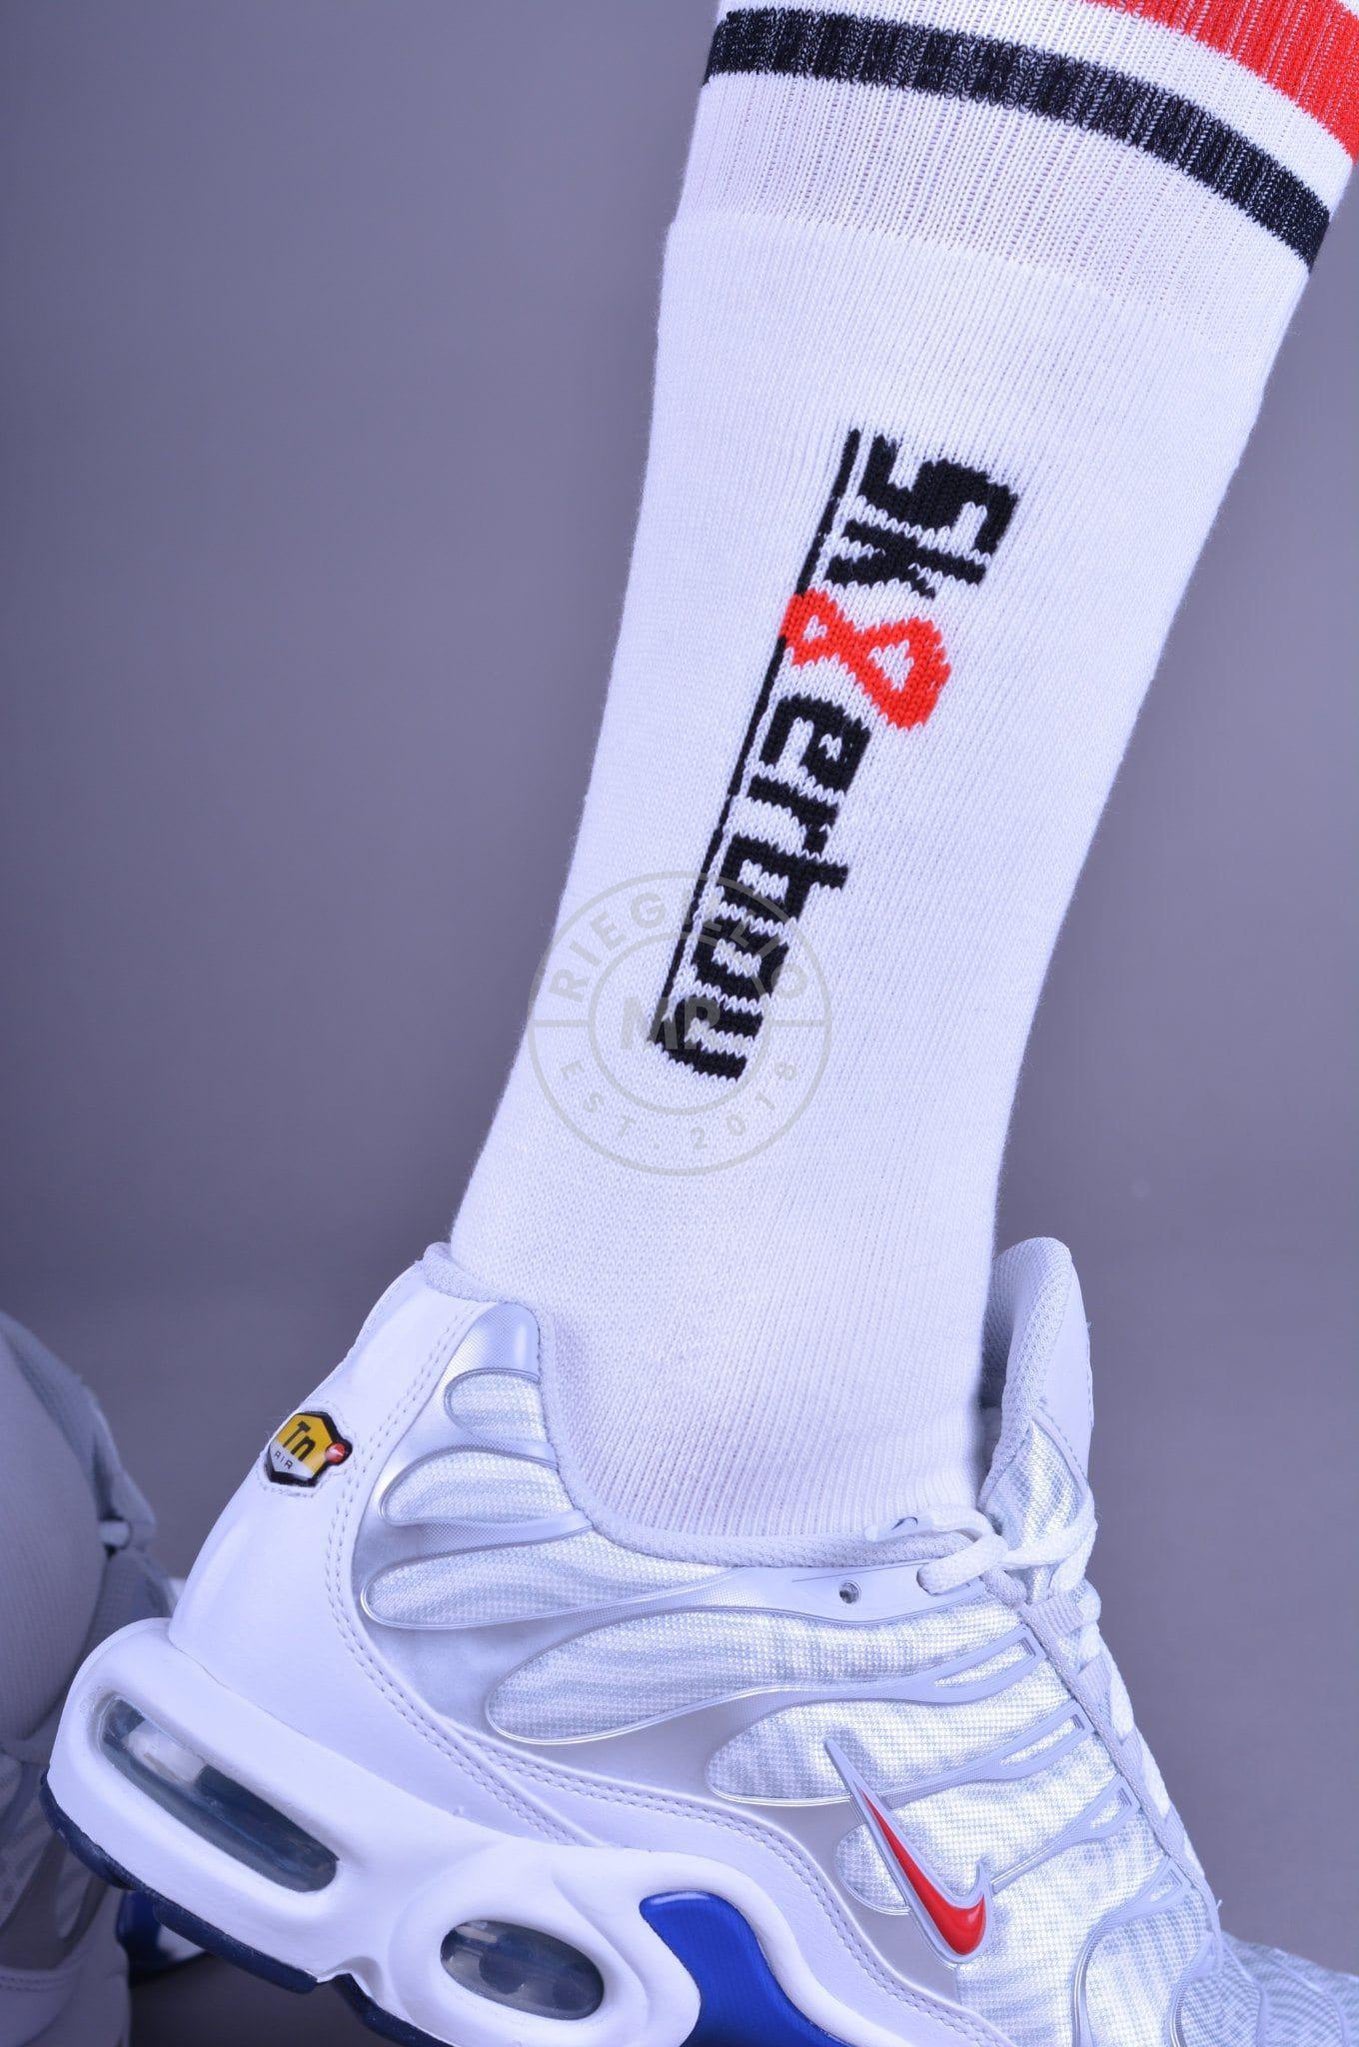 Sk8erboy Tube Socks-at MR. Riegillio